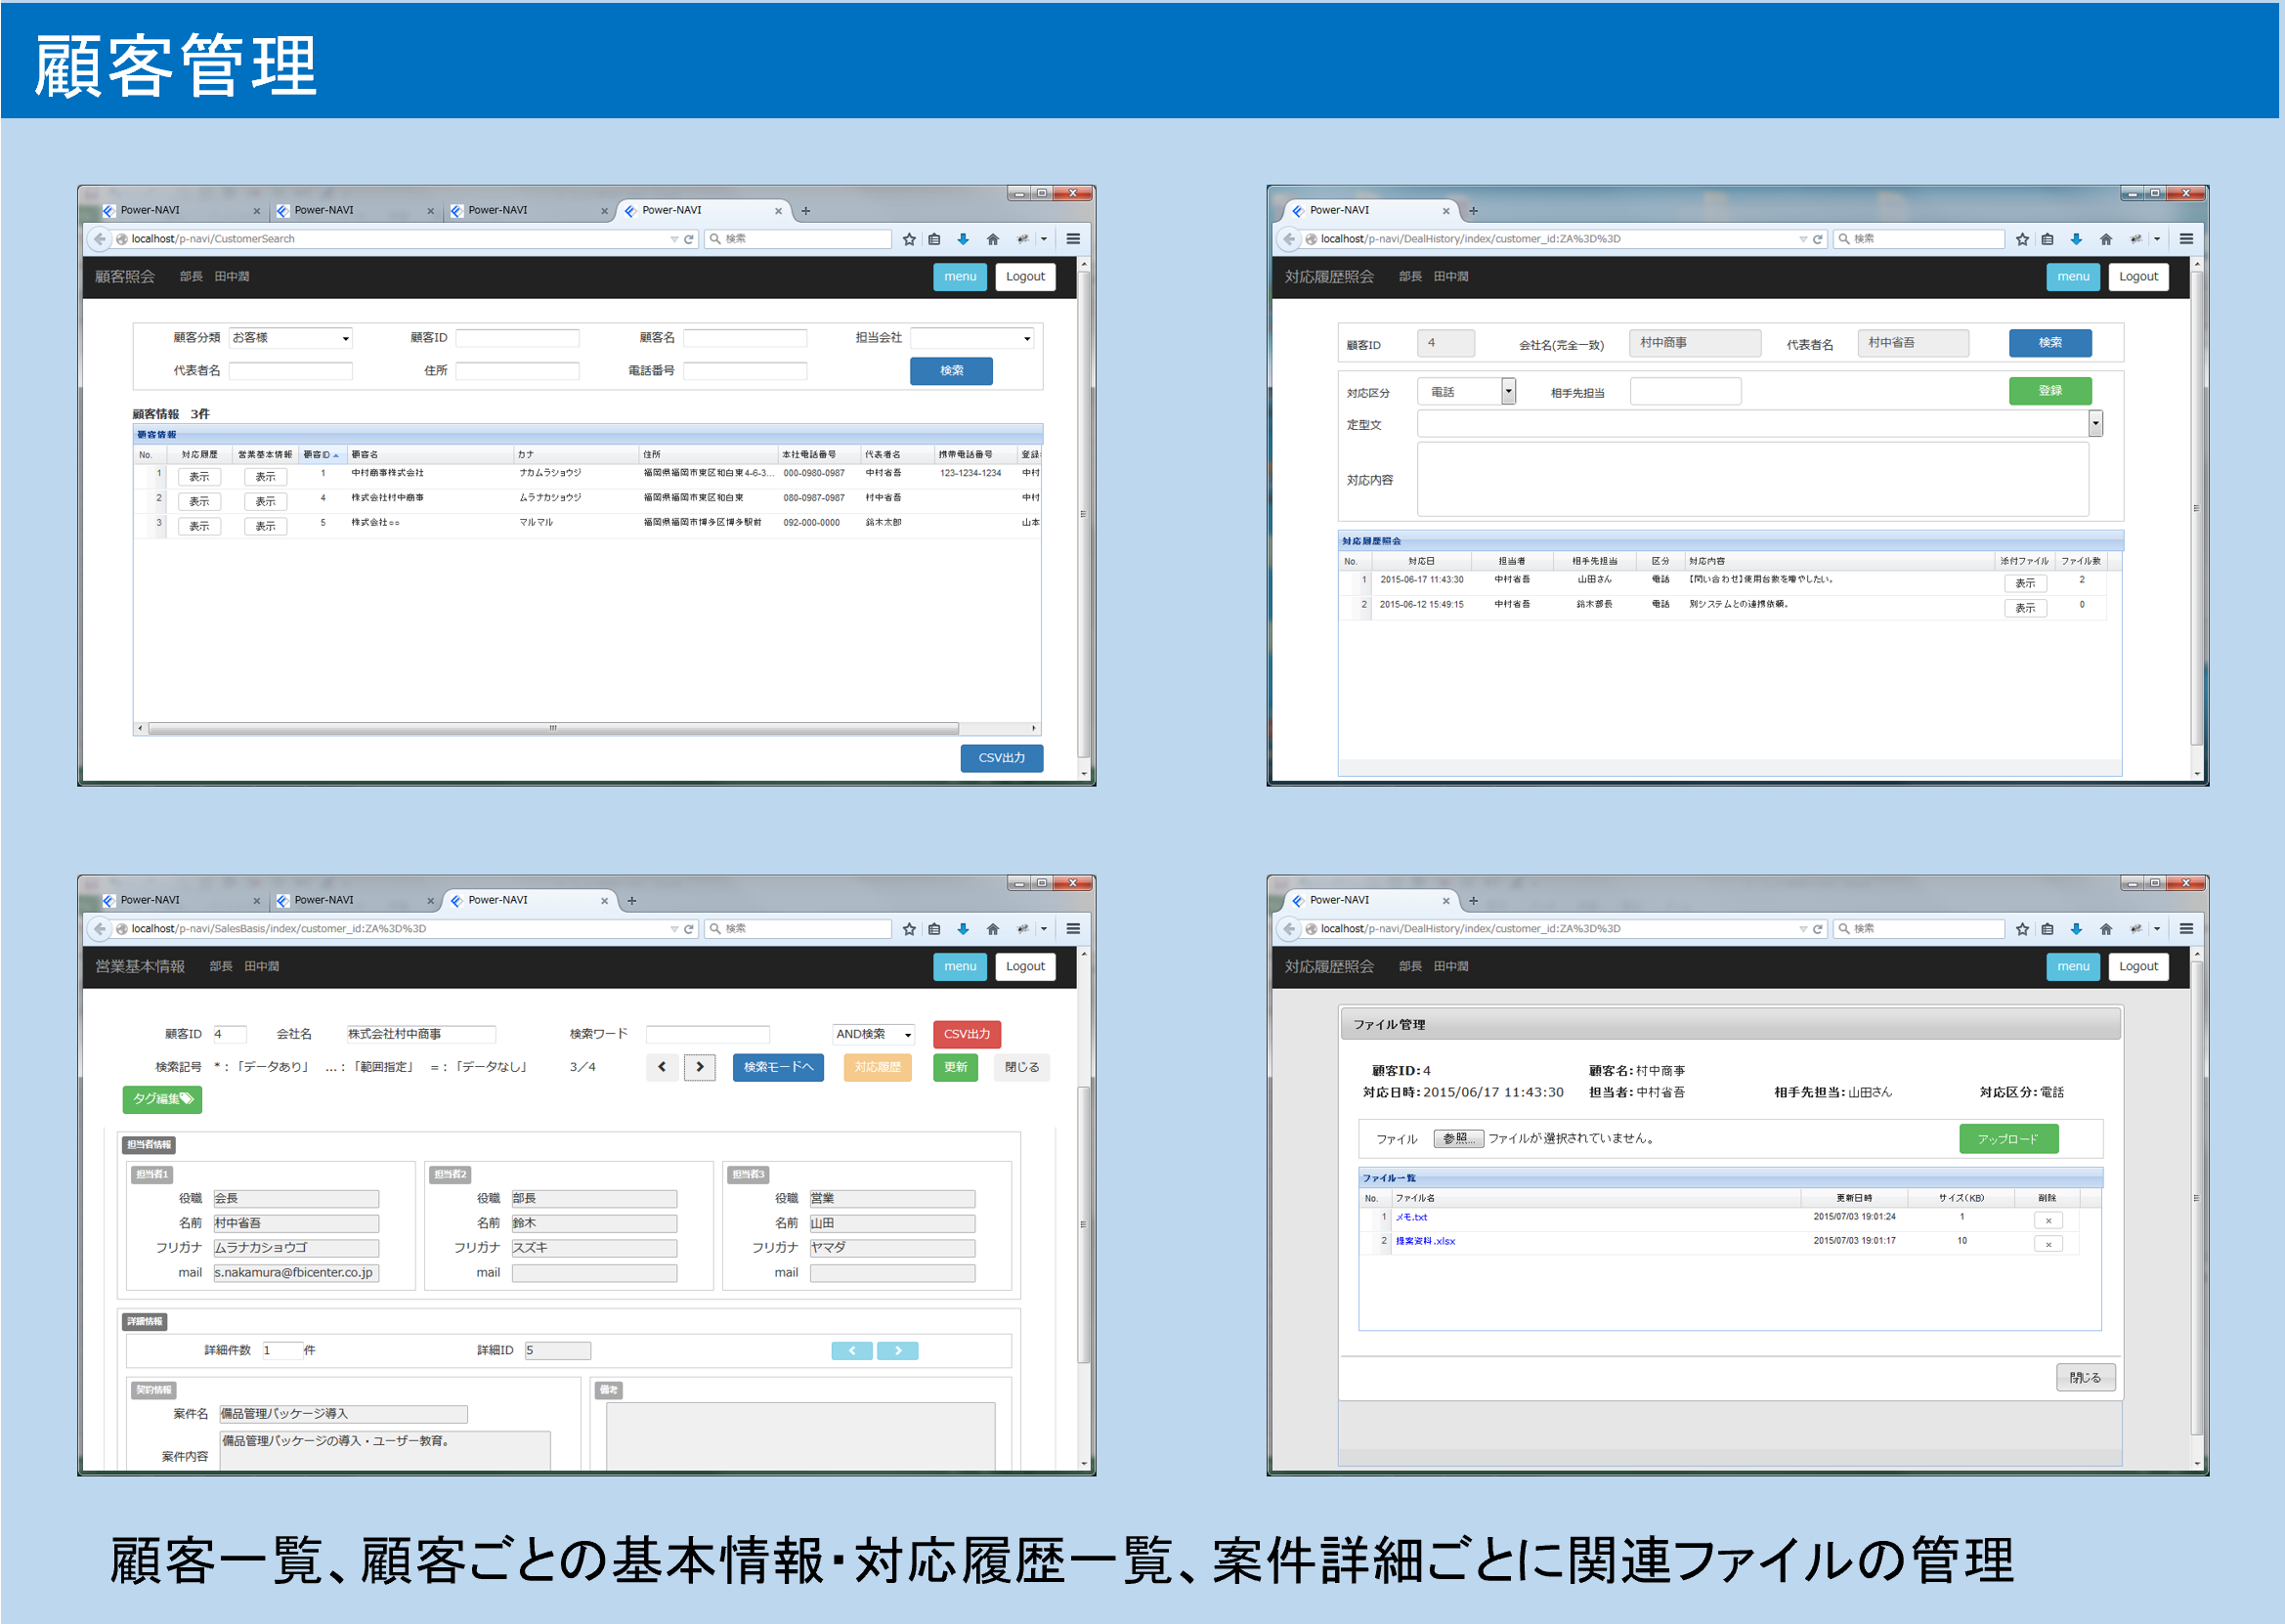 Power-NAVIの顧客管理画面イメージ